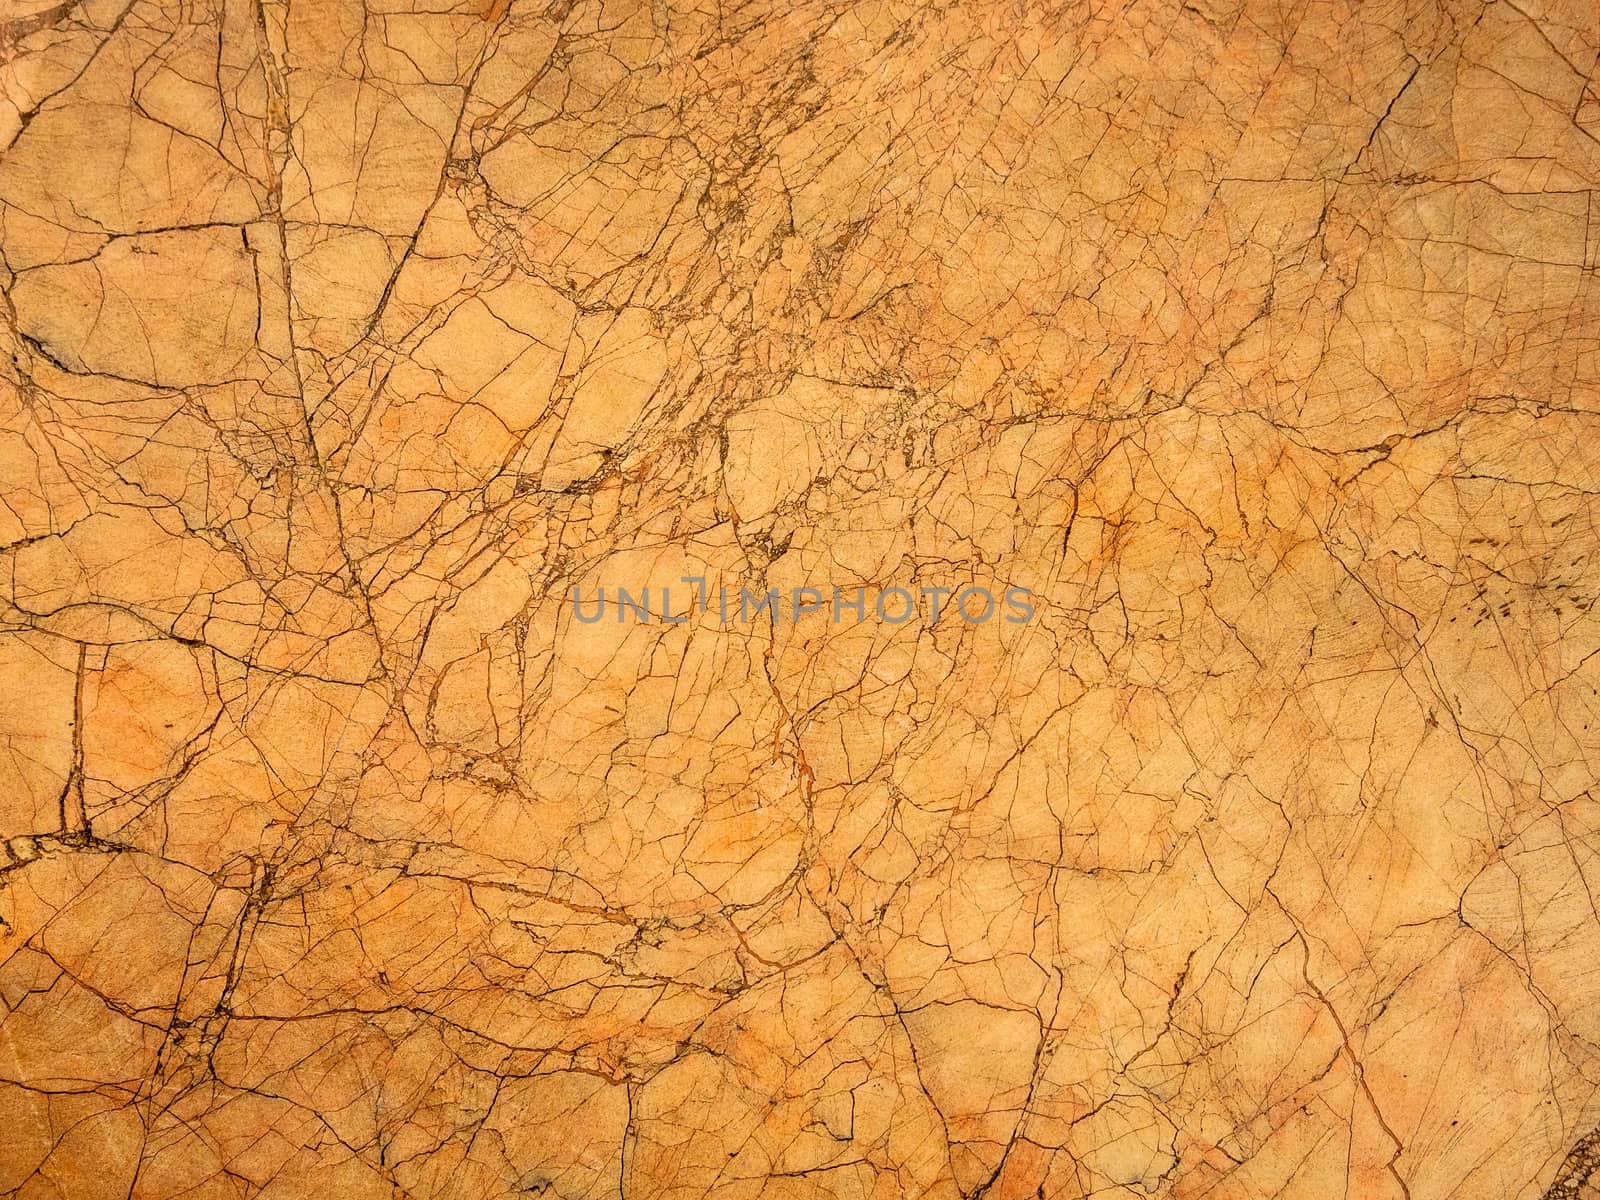 Texture of natural rock by takepicsforfun